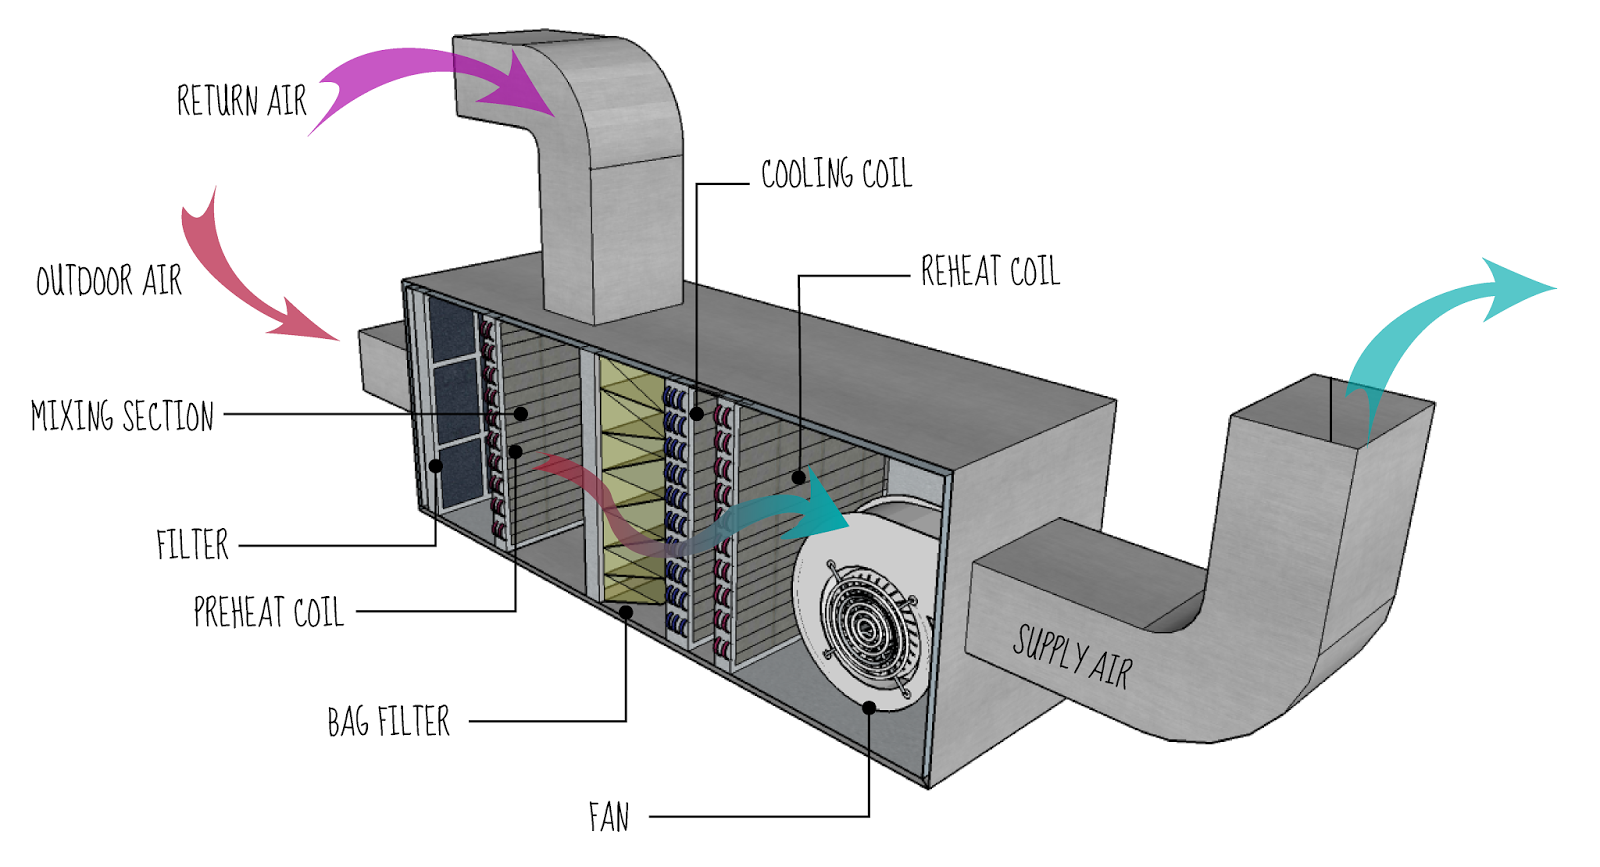 Basic Principles of a HVAC system - ENGINEERING UPDATES